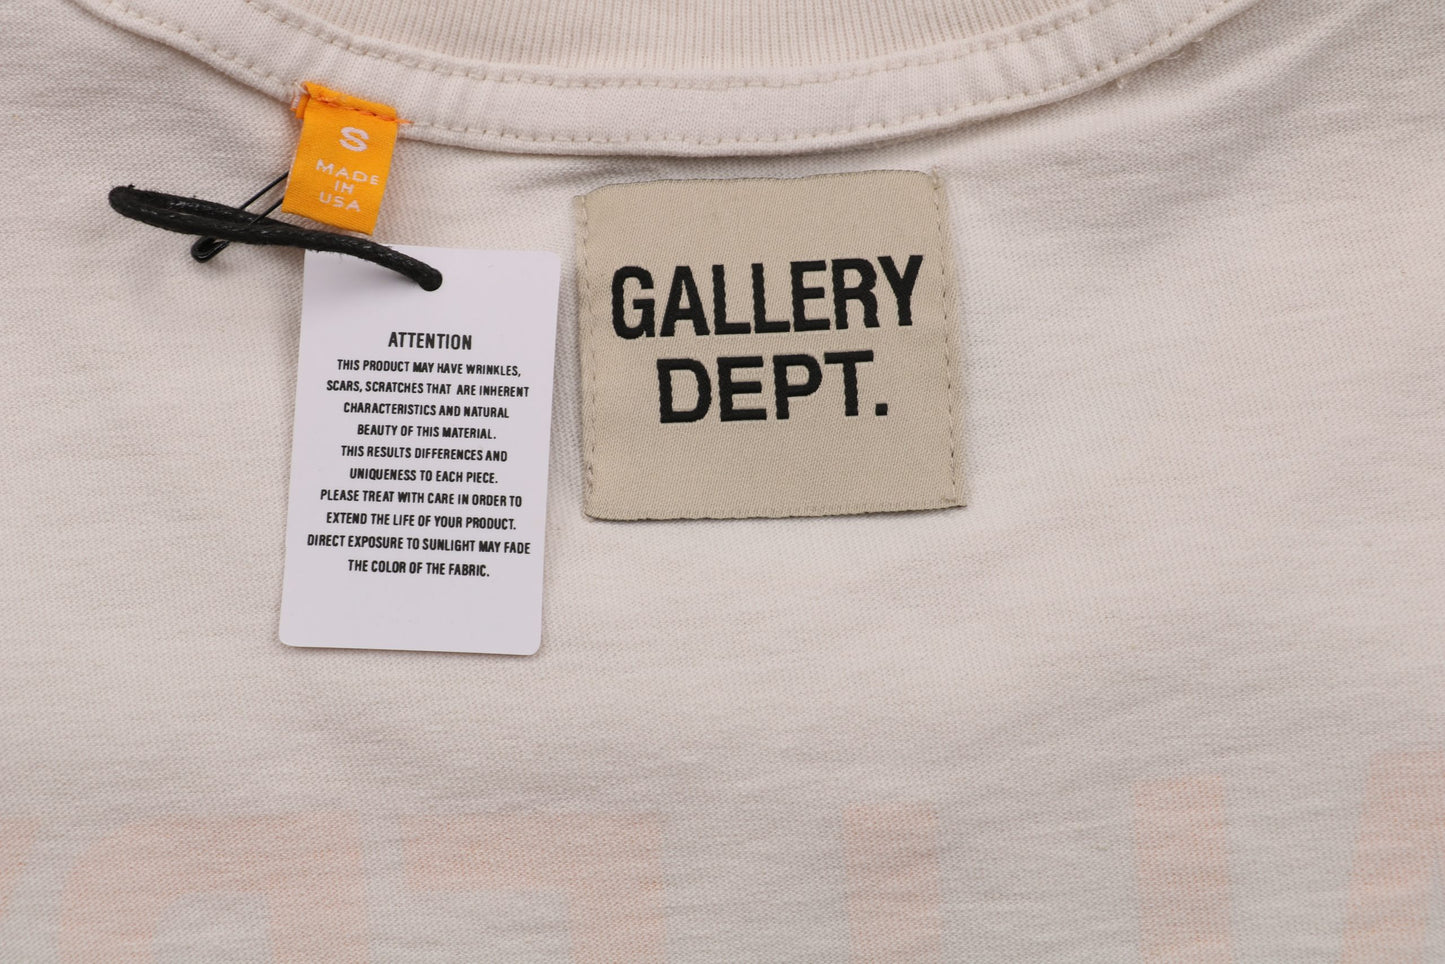 Gallery Dept Ebay T-Shirt